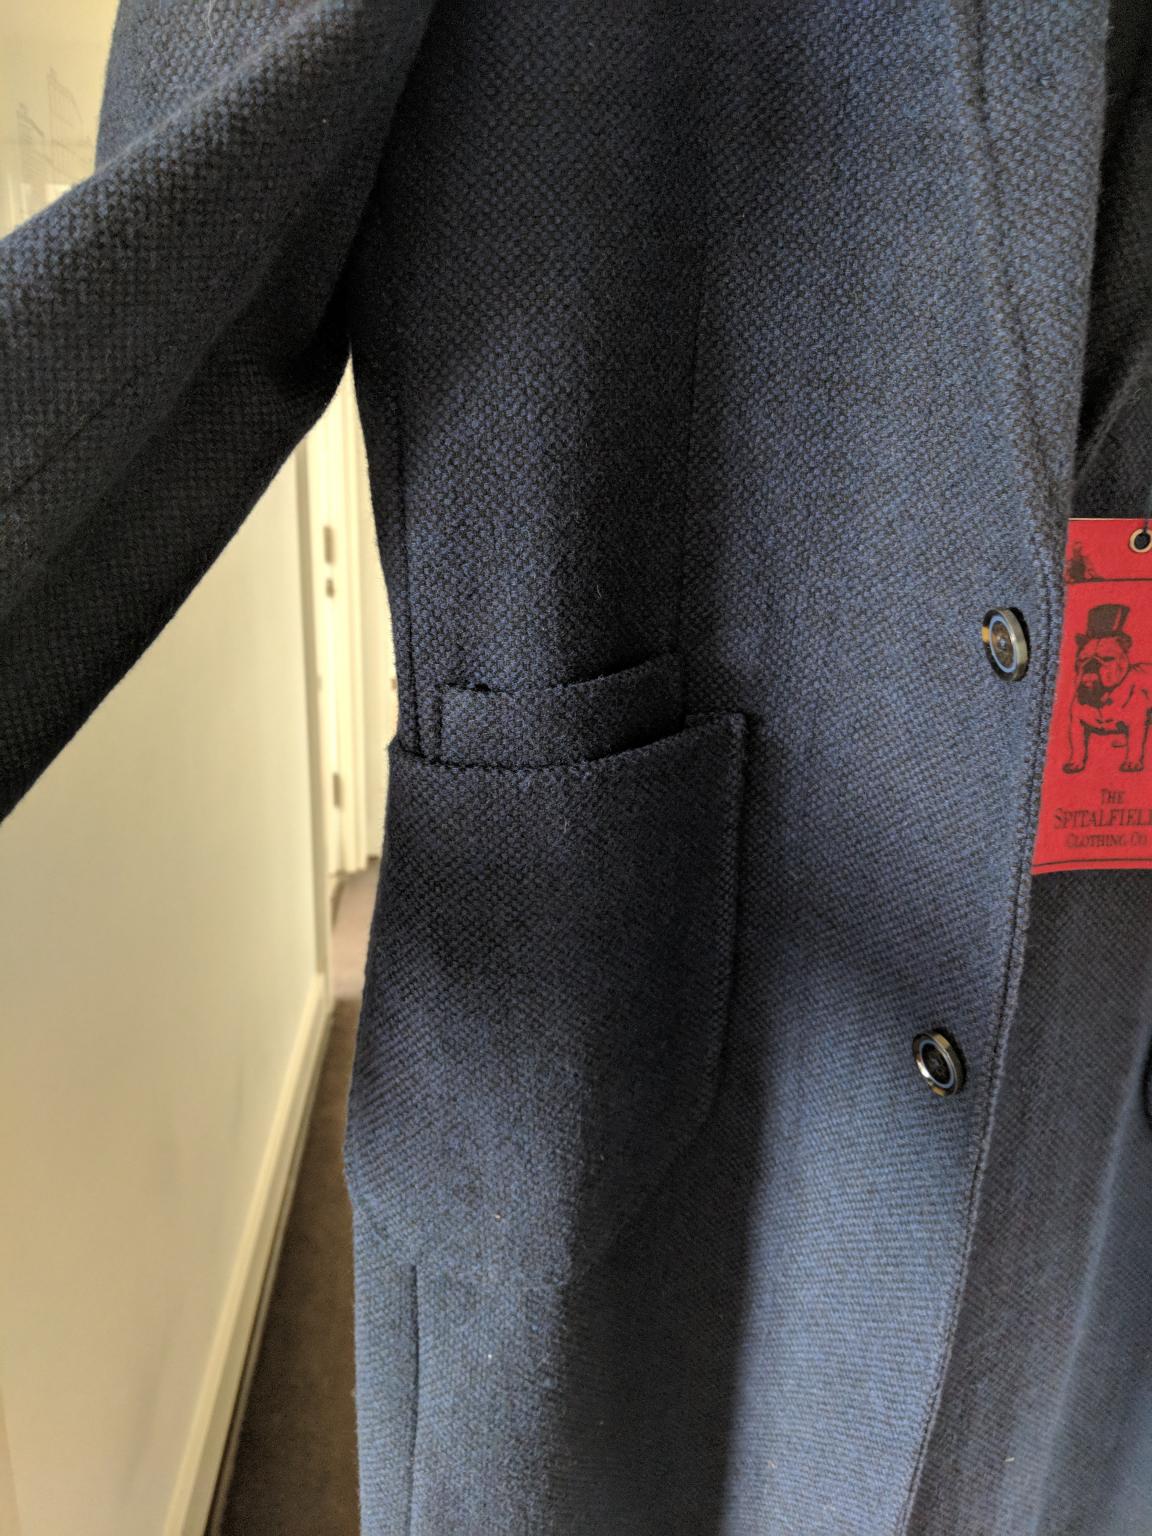 The London Spitalfields Clothing Co Mens Coat in E2 London for £30.00 ...